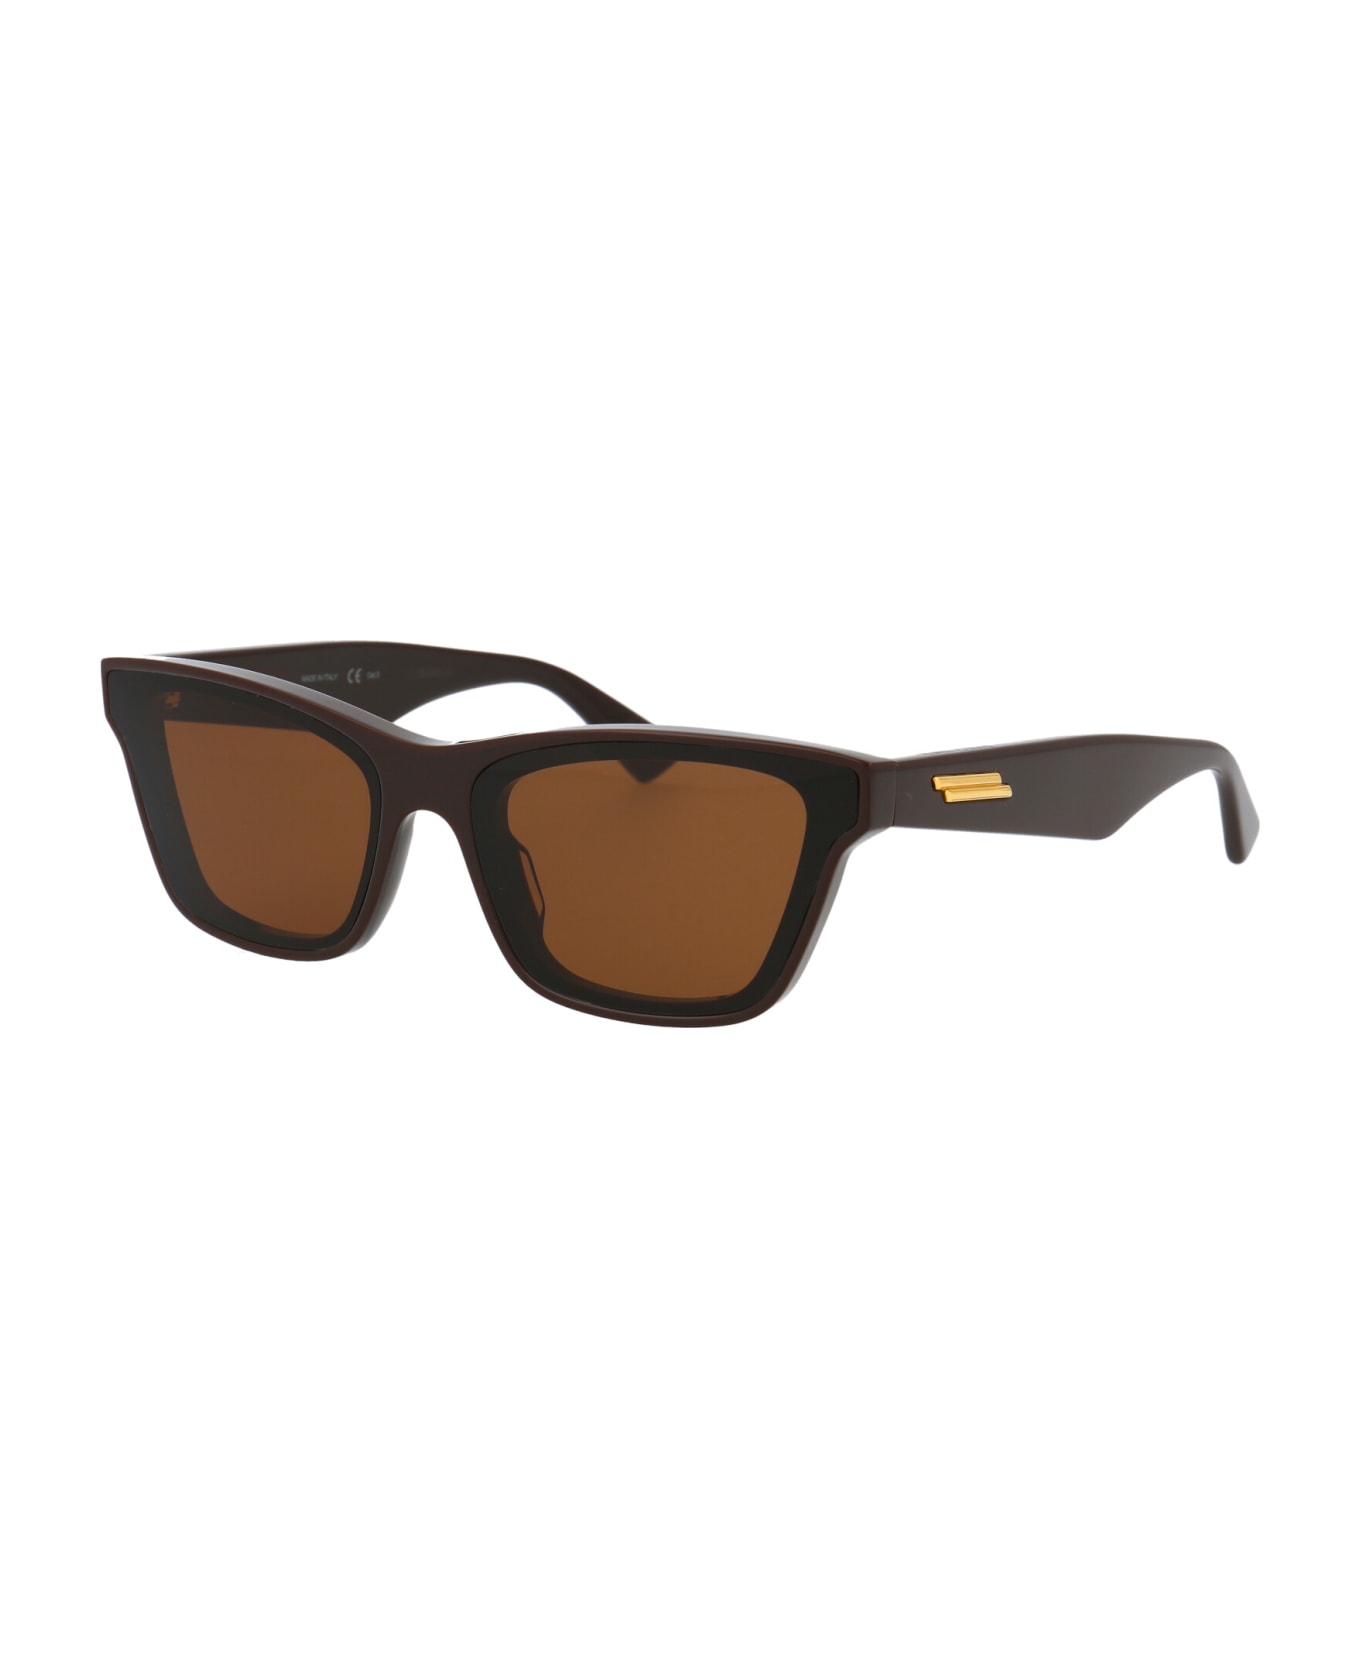 Bottega Veneta Eyewear Bv1119s Sunglasses - 004 BROWN BROWN BROWN